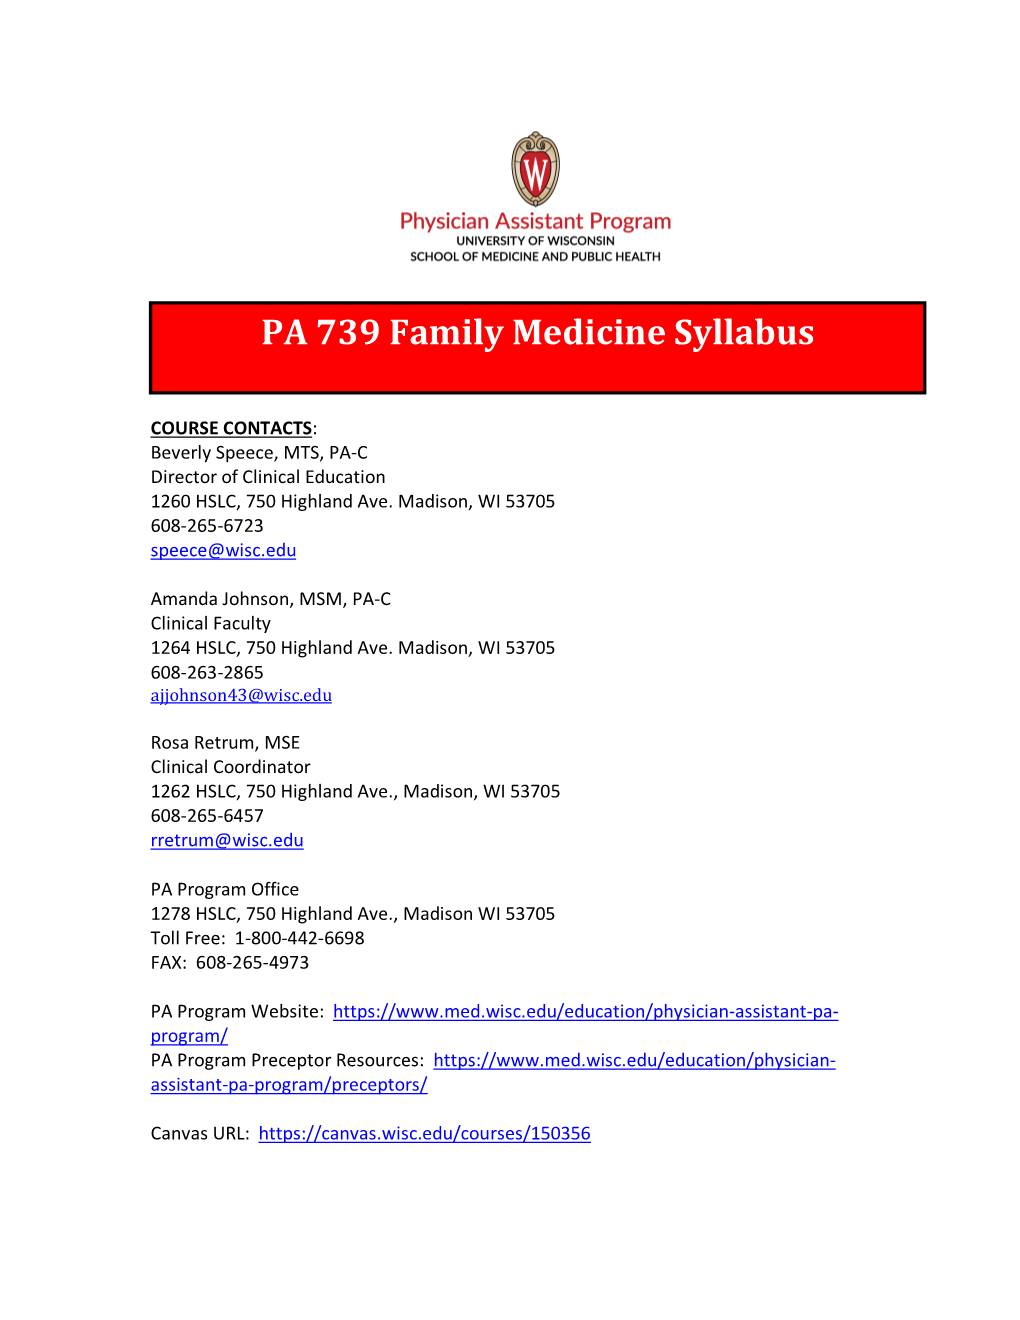 PA 739 Family Medicine Syllabus | Physician Assistant (PA) Program